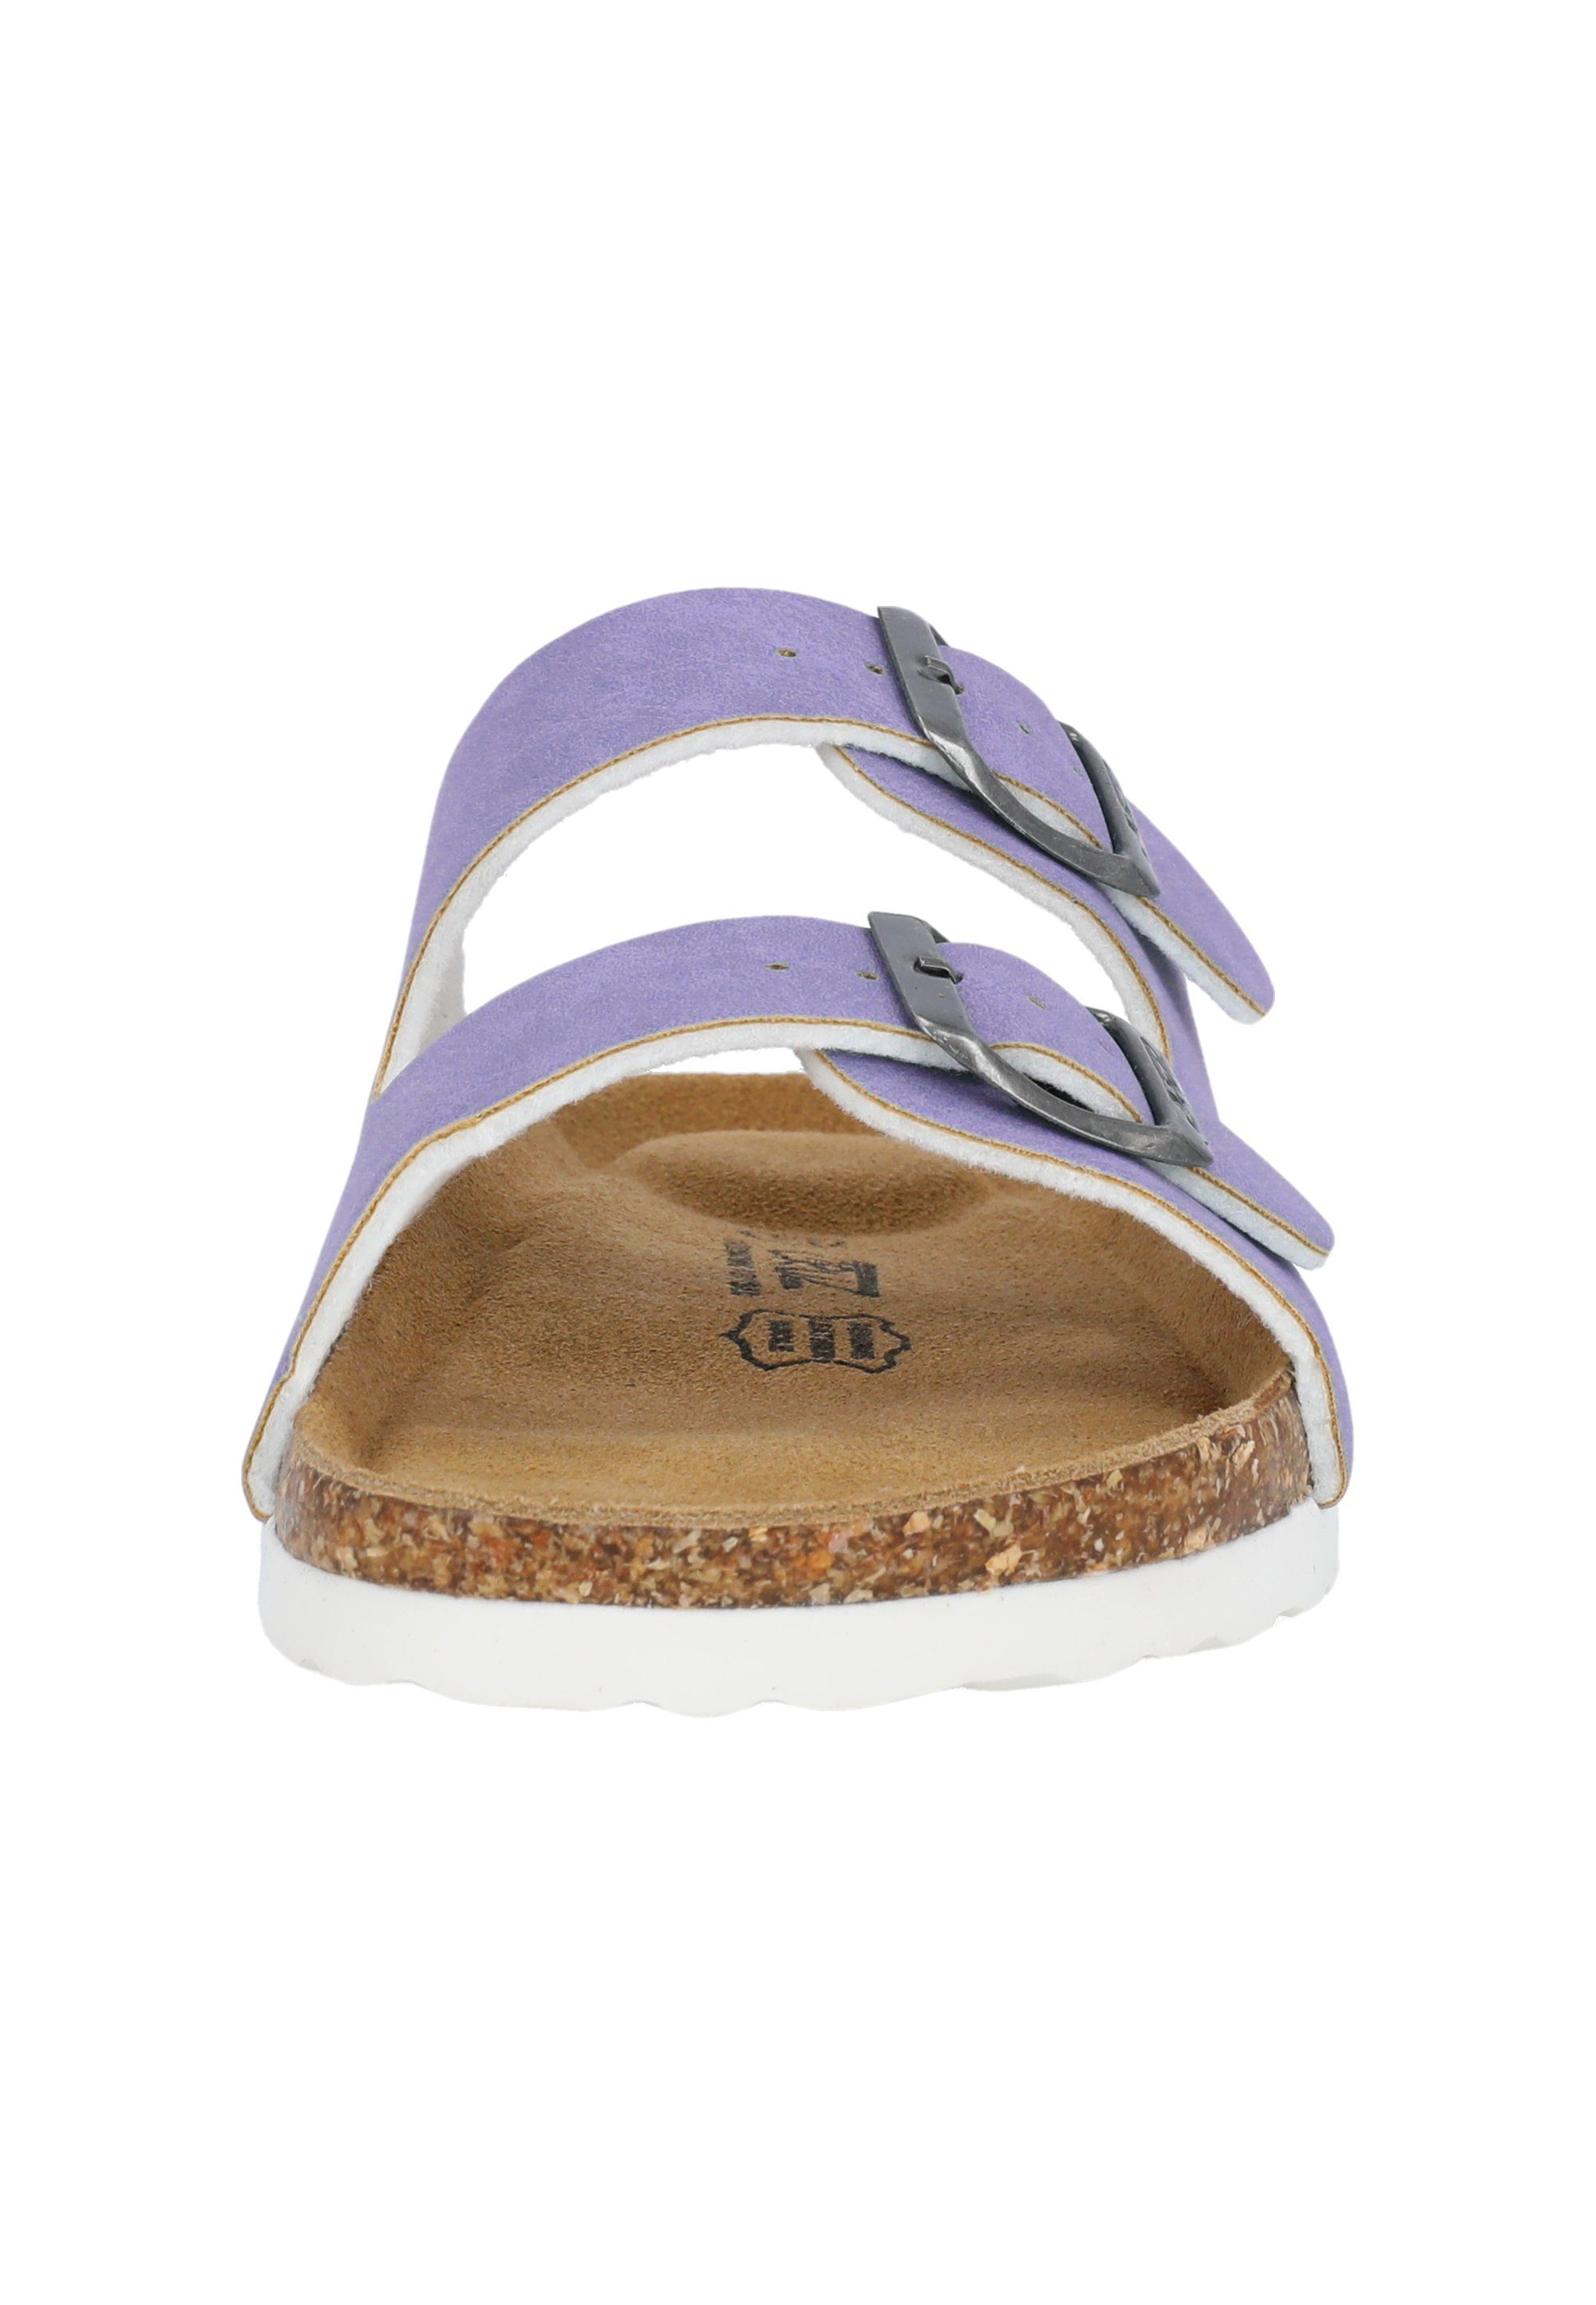 CRUZ Hardingburg Sandale mit lila Fußbett ergonomischem